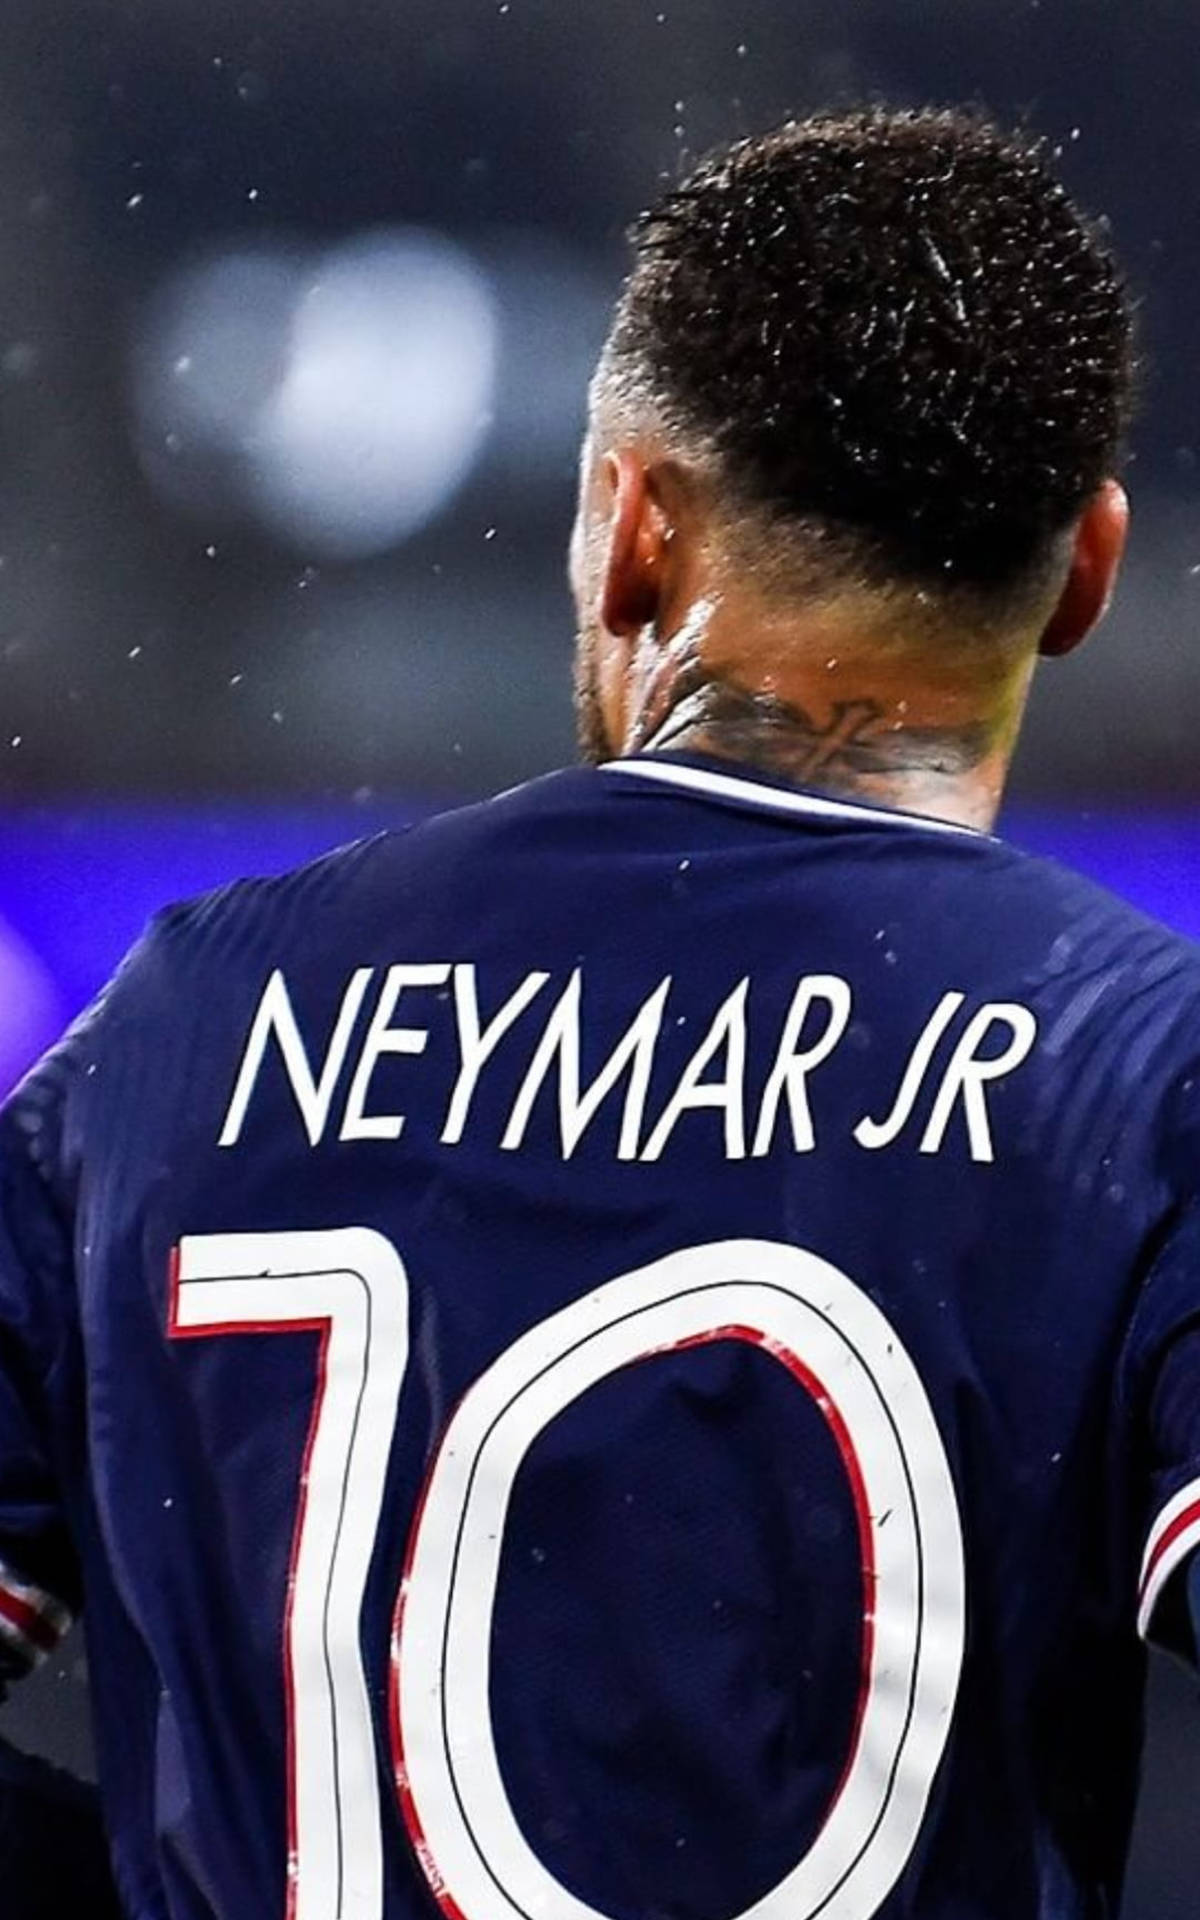 Jersey 10 Of Neymar Jr Background